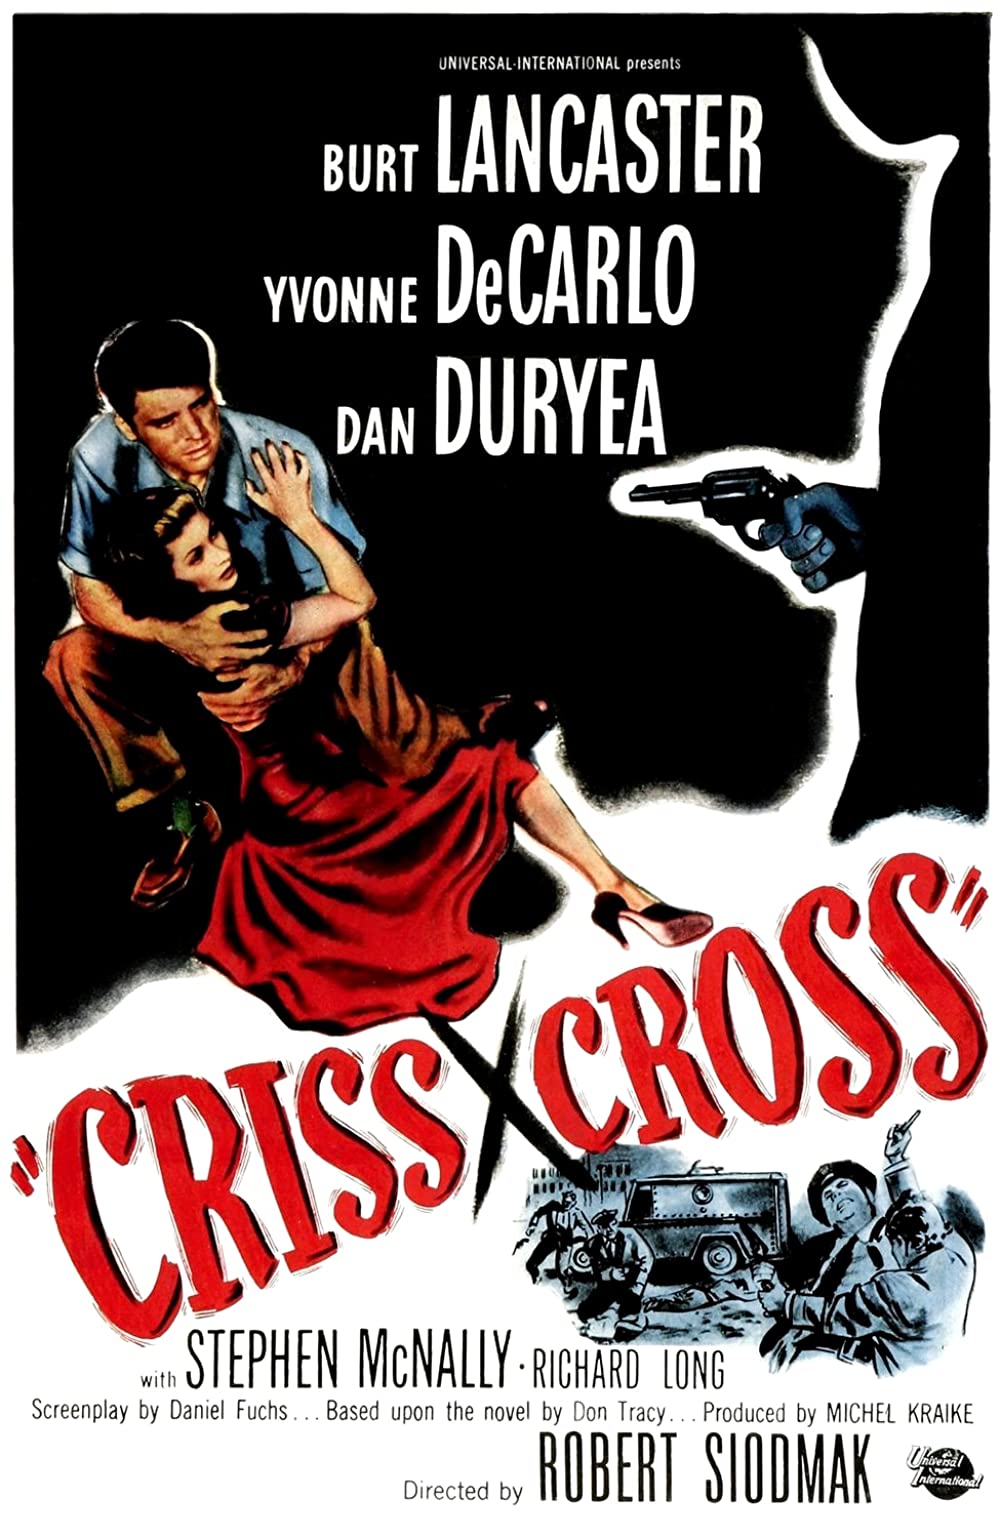 Criss Cross (1949)